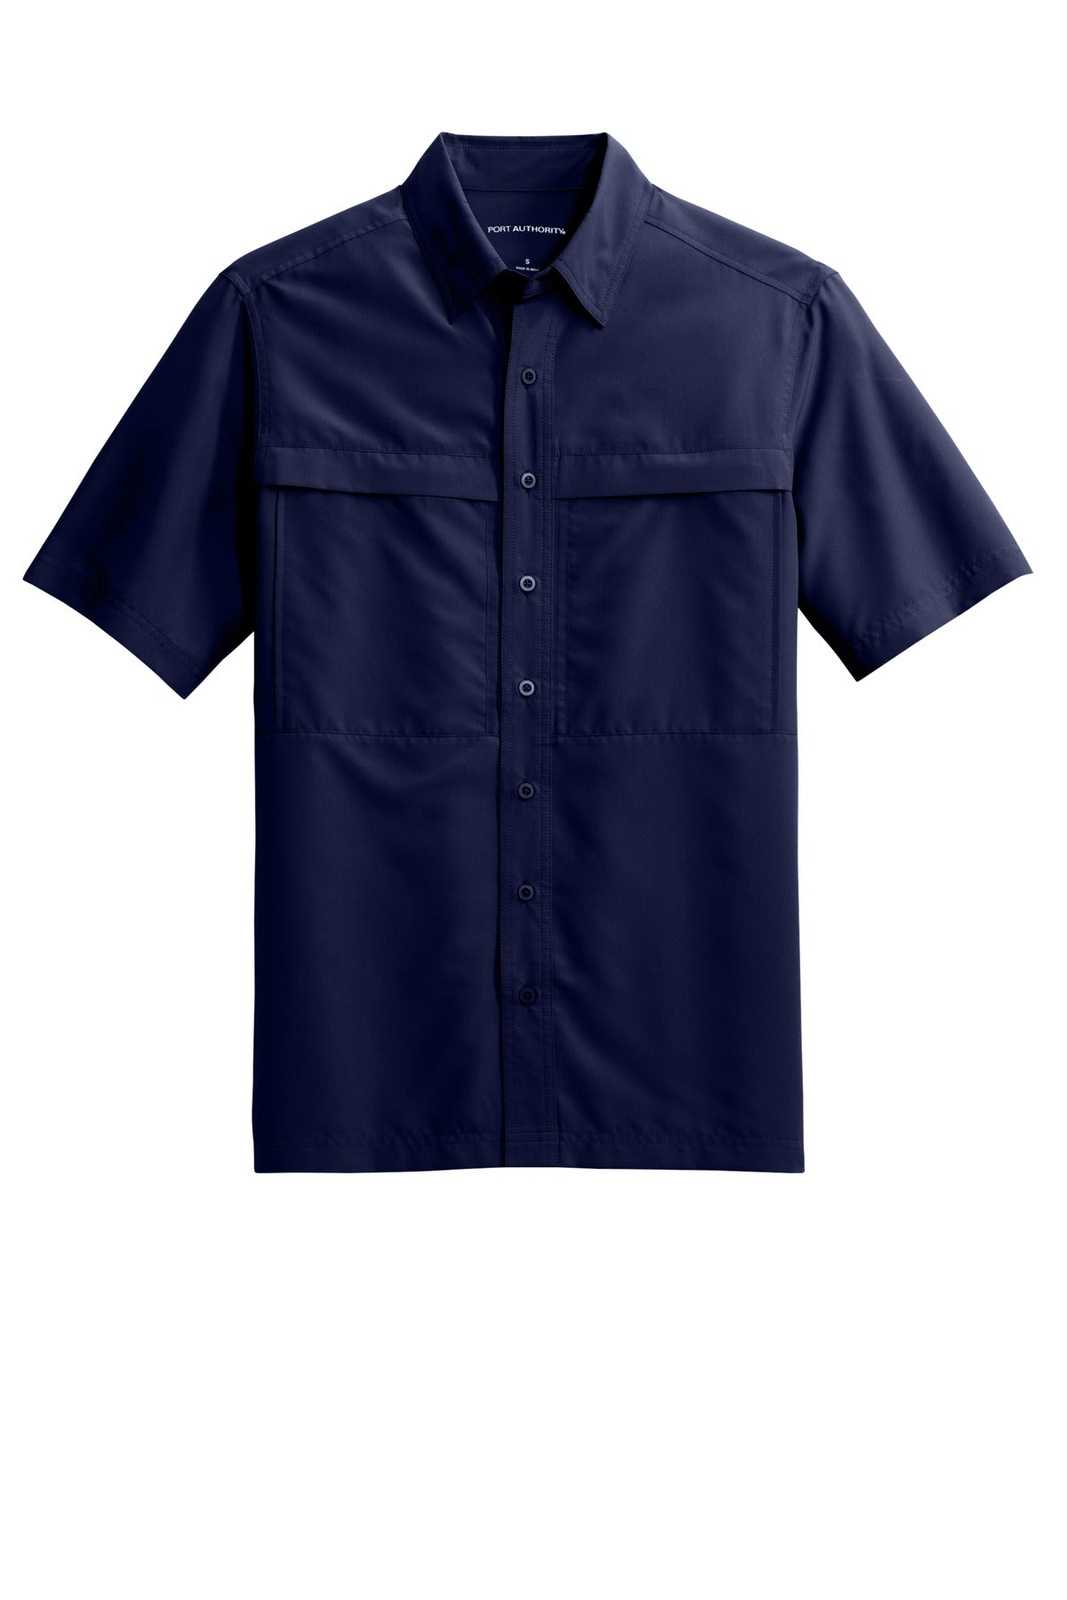 Port Authority W961 Short Sleeve UV Daybreak Shirt - True Navy - HIT a Double - 2